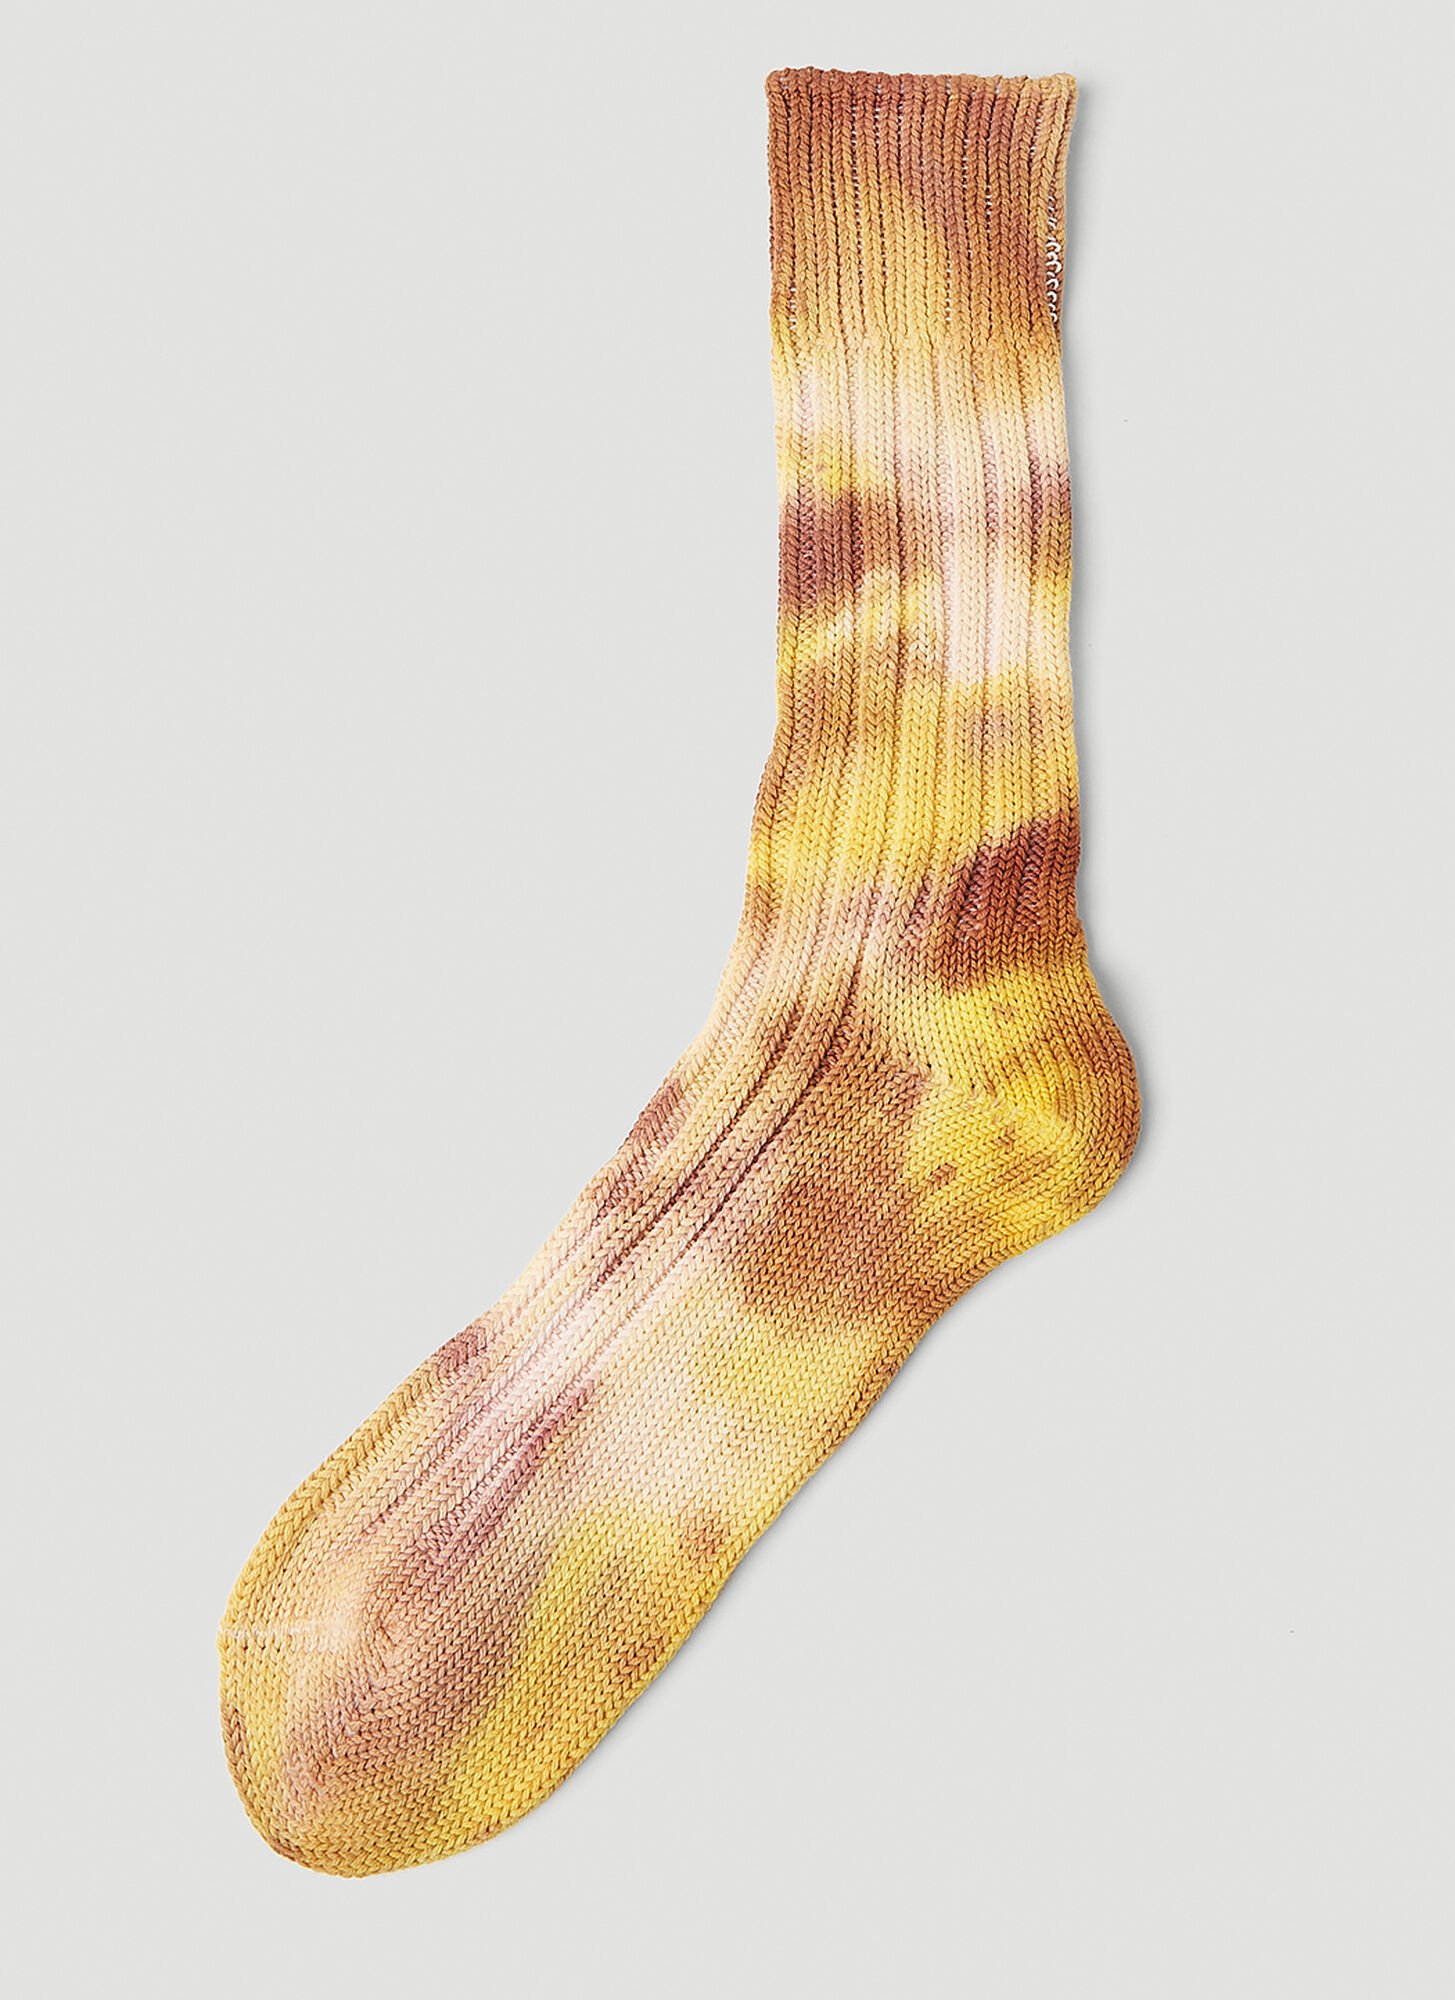 Stain Shade X Decka Socks Tie Dye Socks Unisex Yellow